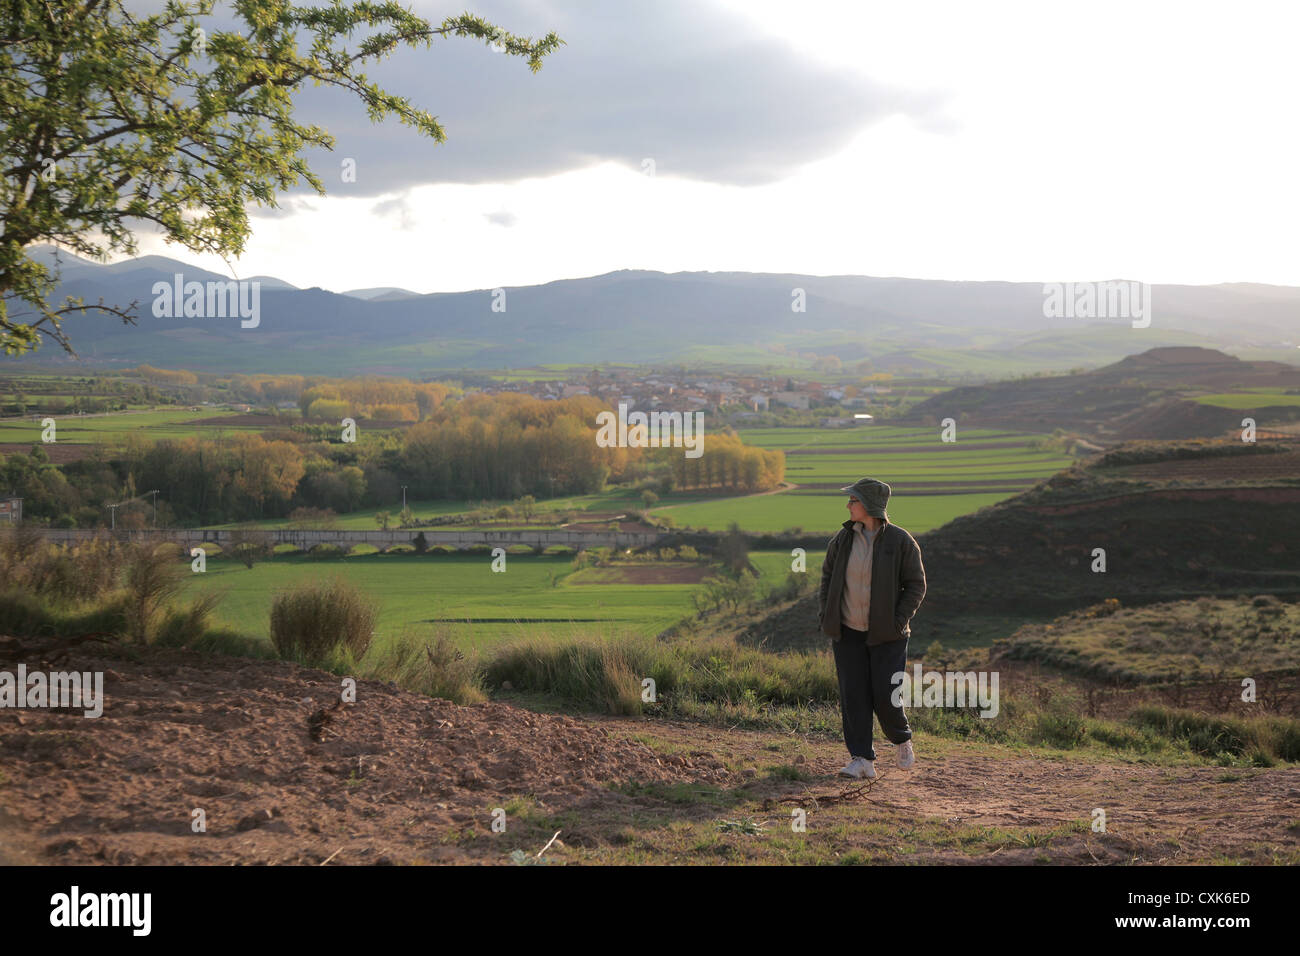 Cardenas valley, San Millan de la Cogolla, Badaran, Rioja wine region, Spain, Europe, Mediterranean, Stock Photo